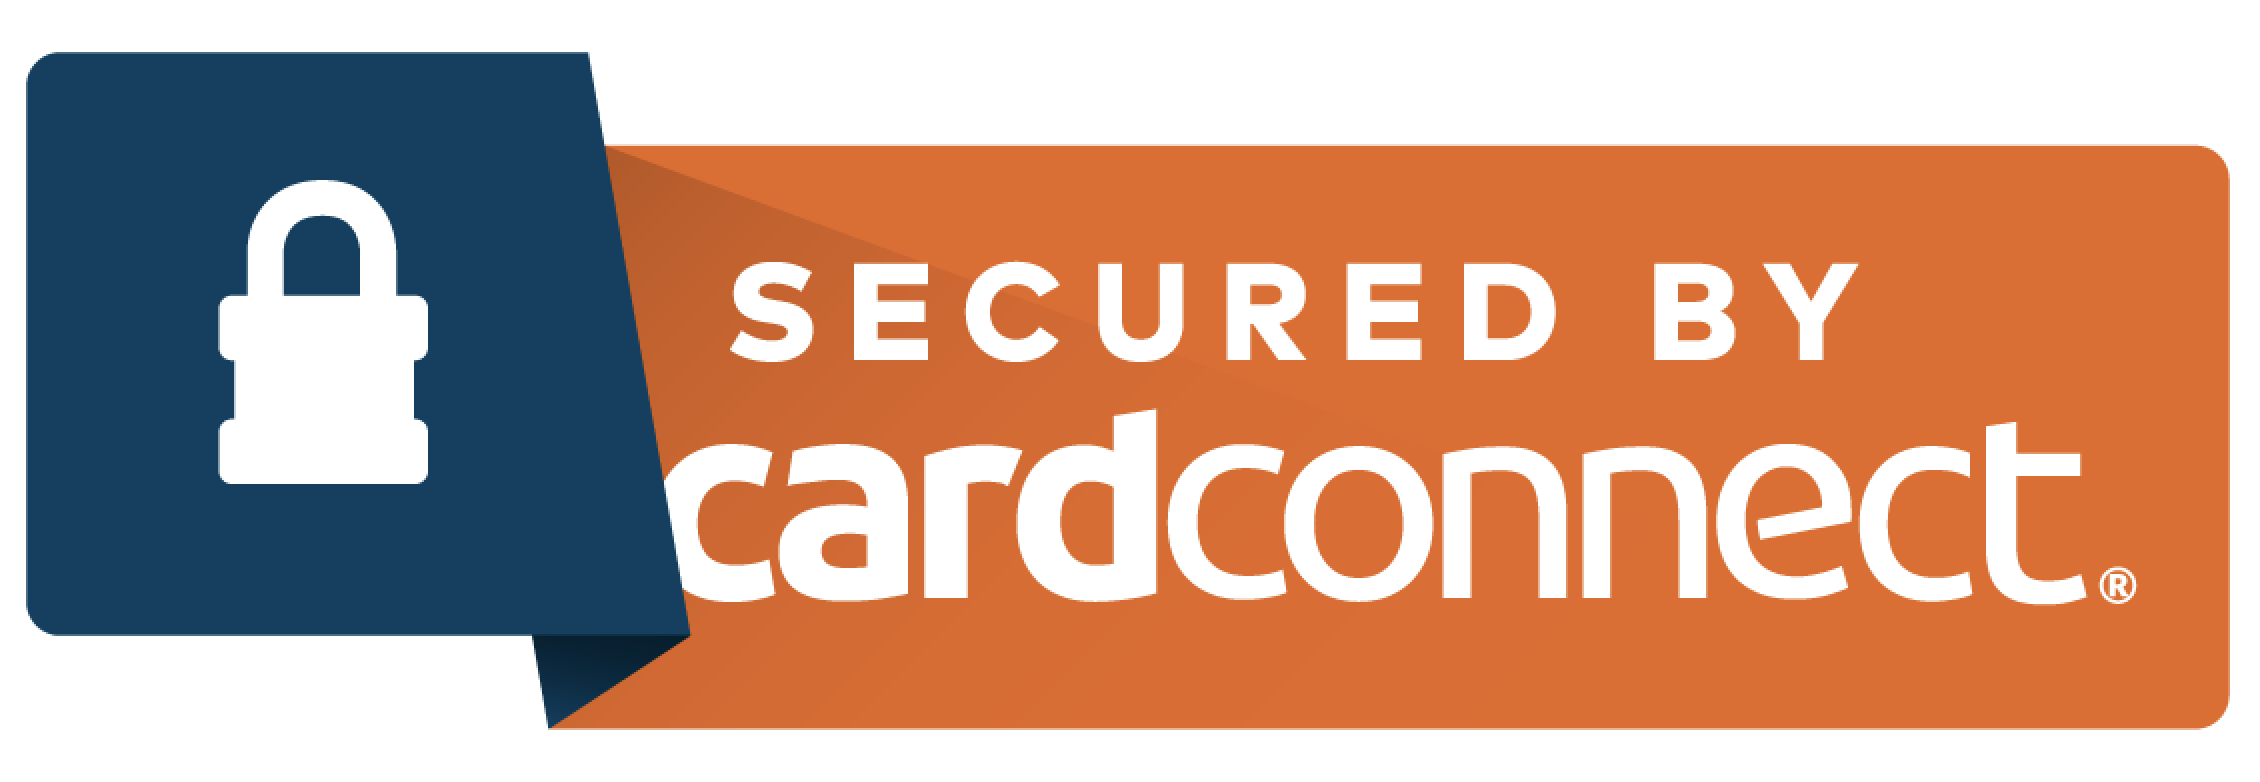 cardconnect secure